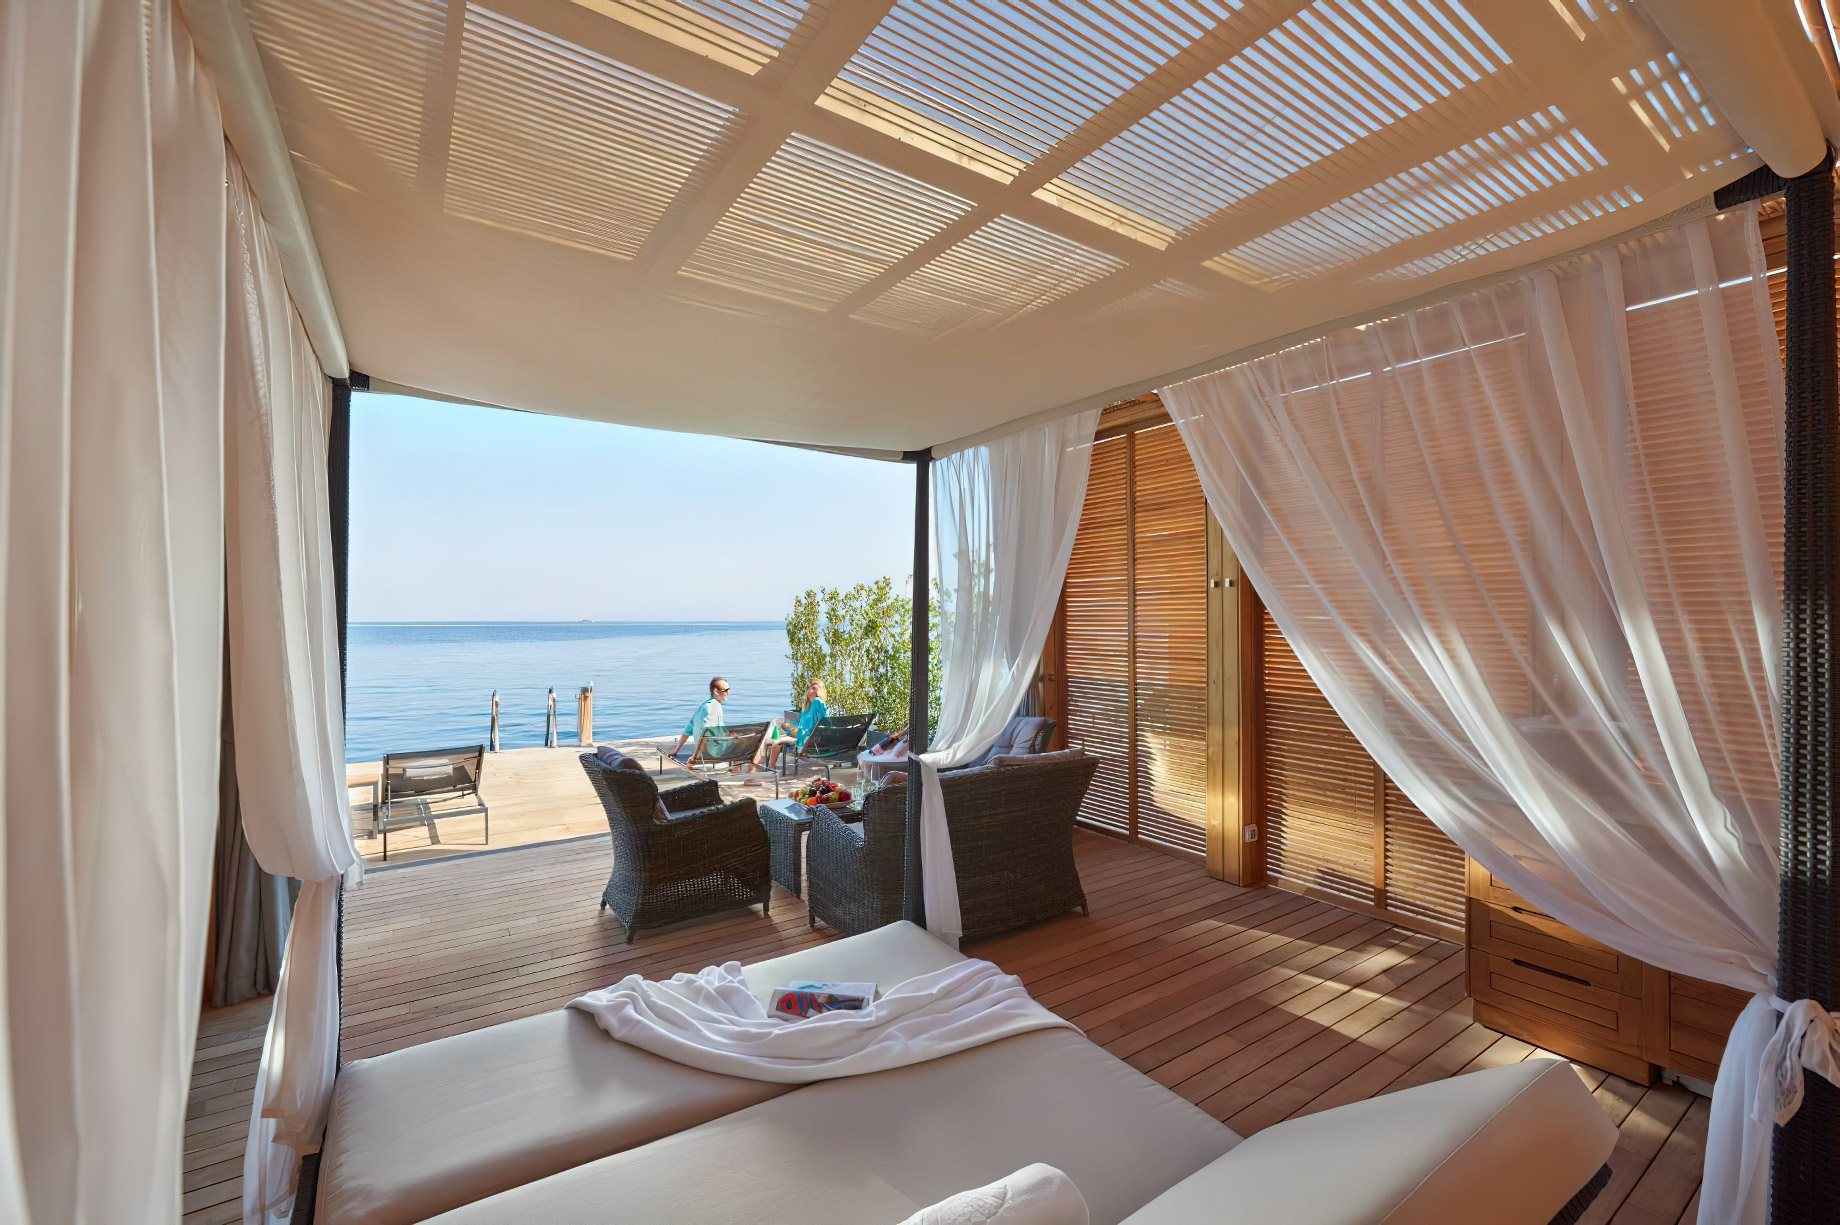 Mandarin Oriental, Bodrum Hotel – Bodrum, Turkey – Blue Beach Club Cabana